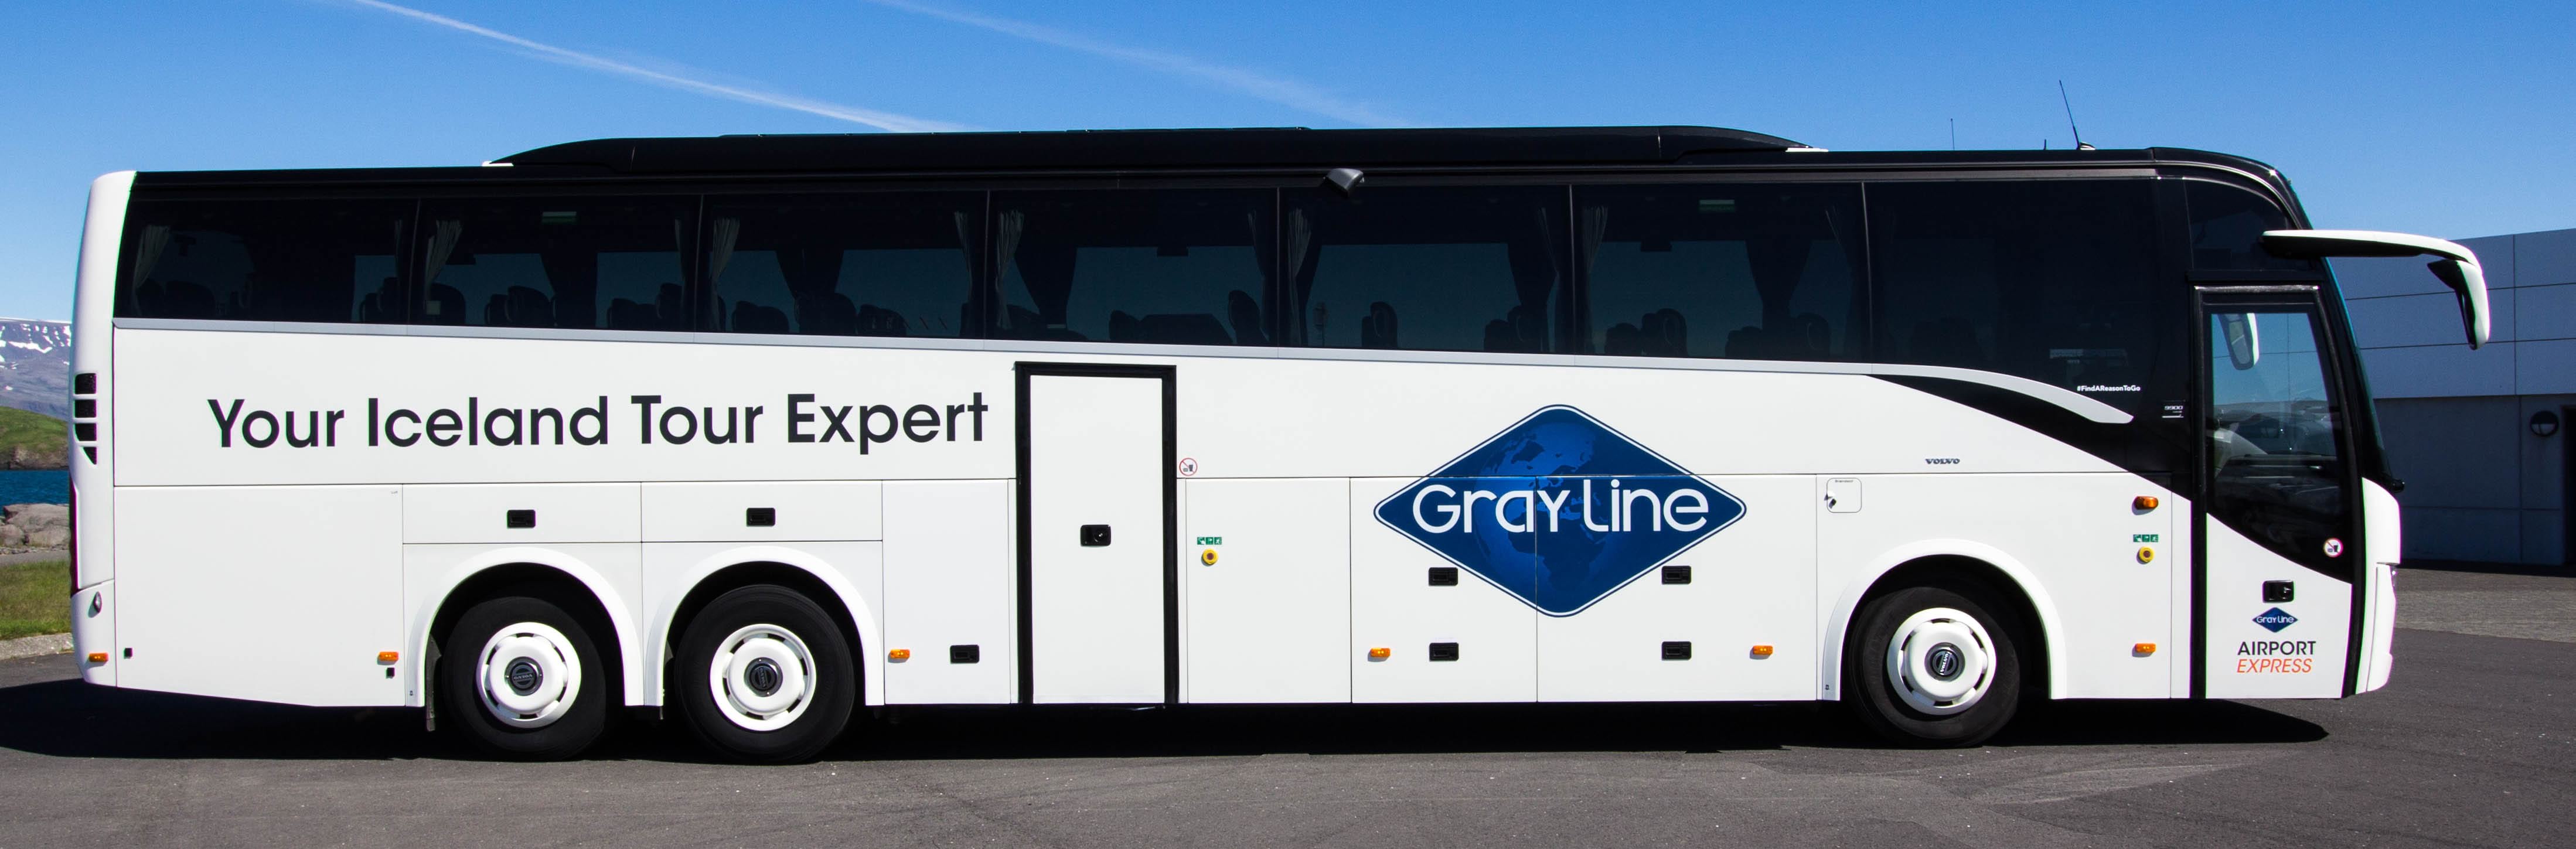 grayline bus tours iceland